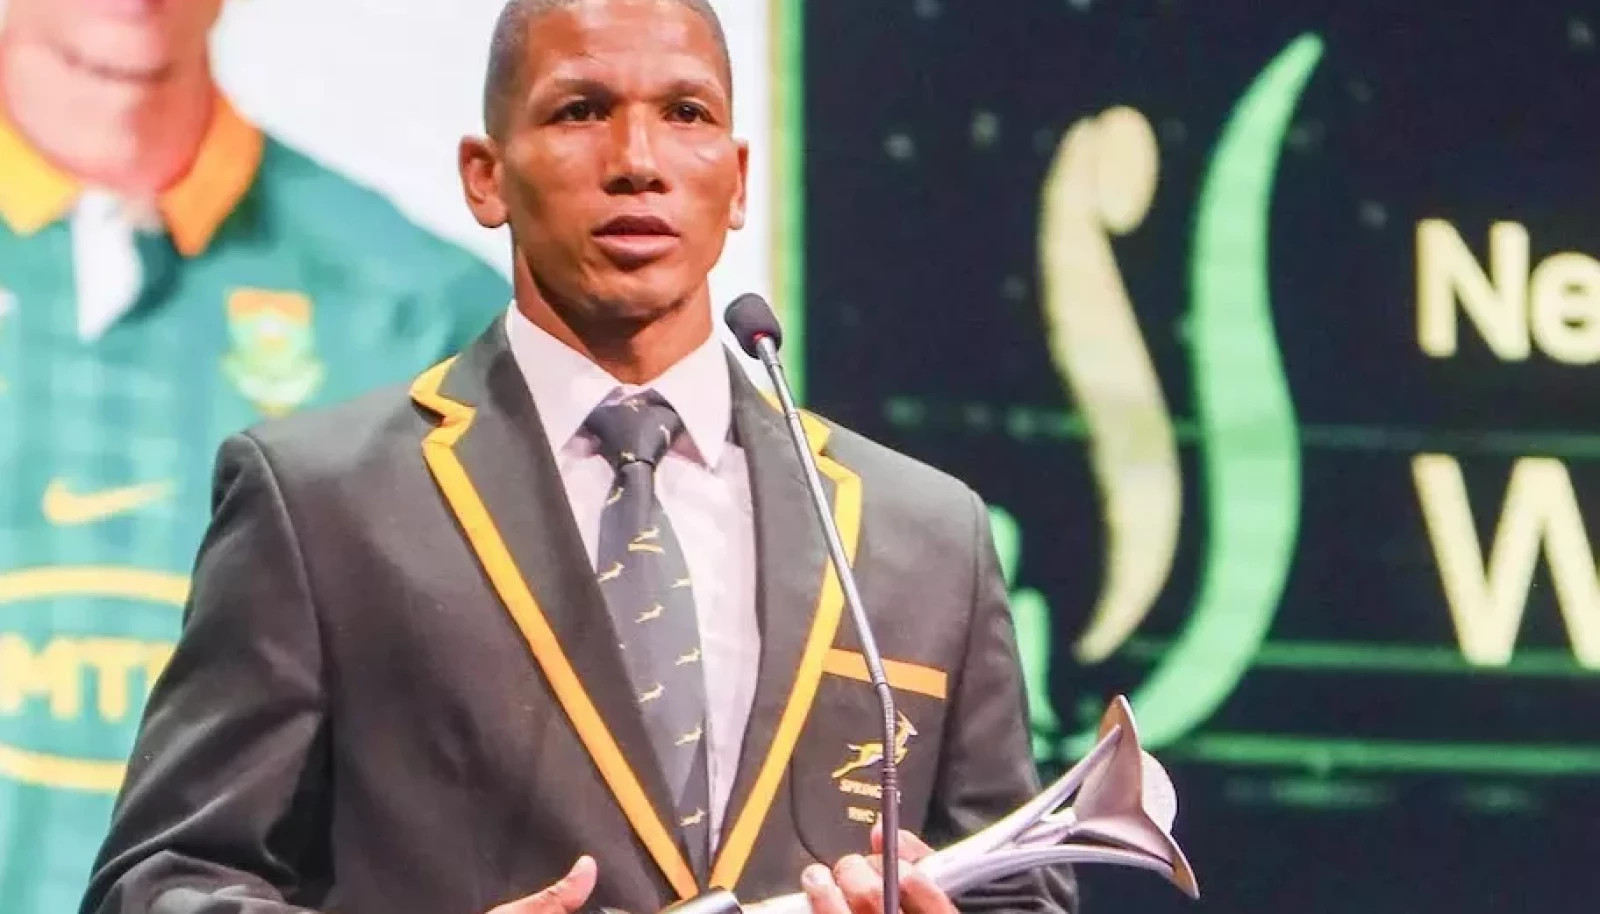 mannie libbok credits unity in springboks team after sa sports awards win